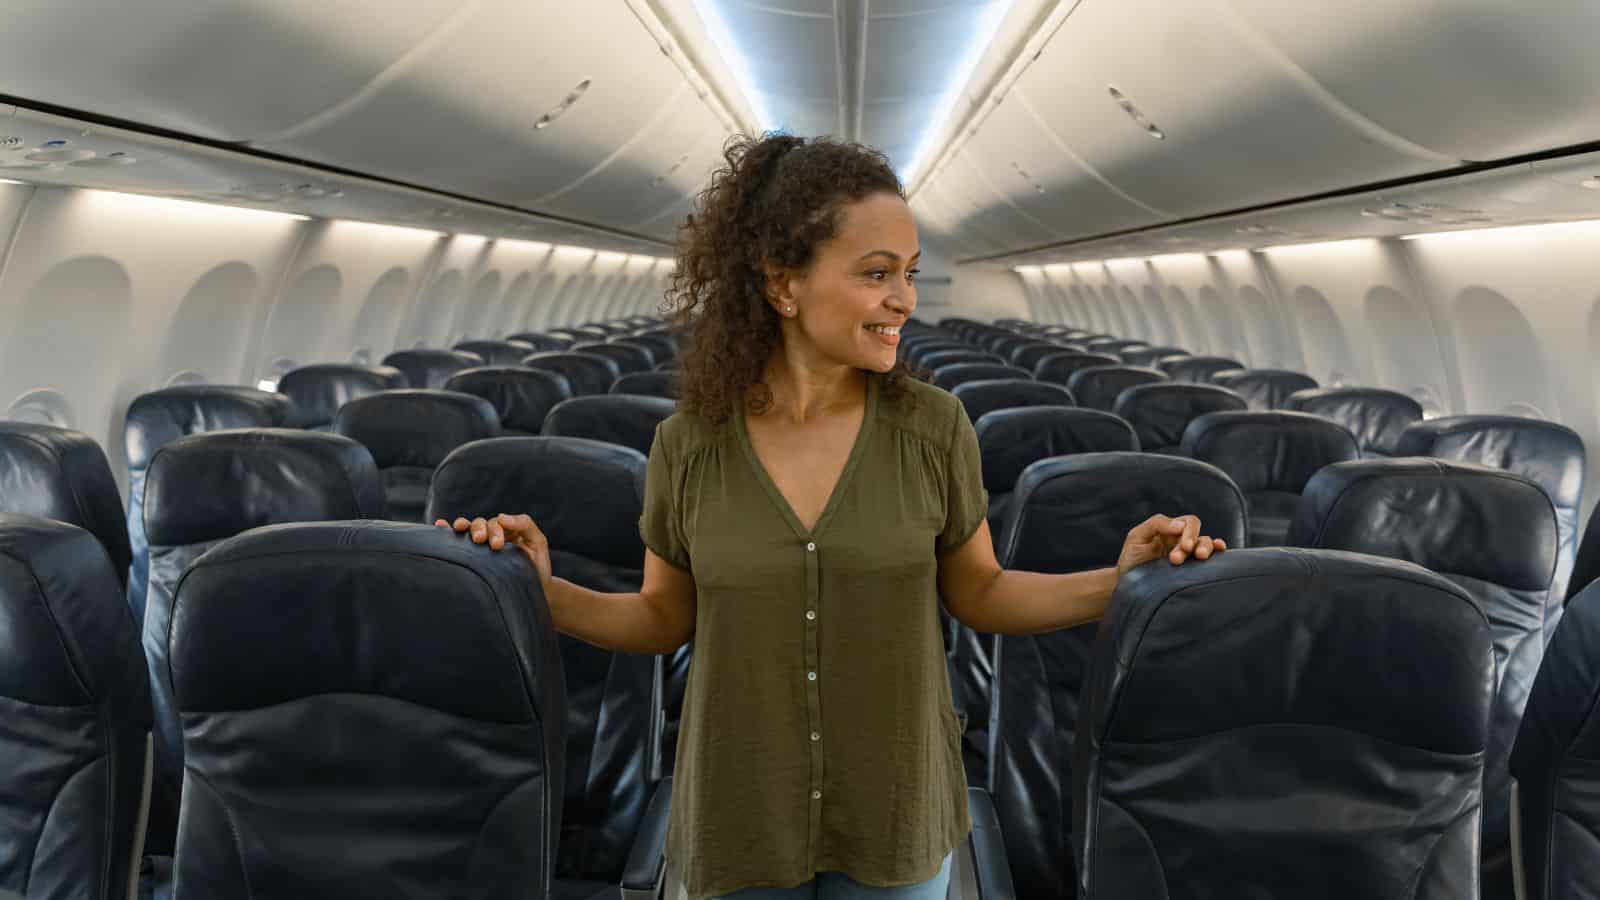 Passenger between aisles on plane